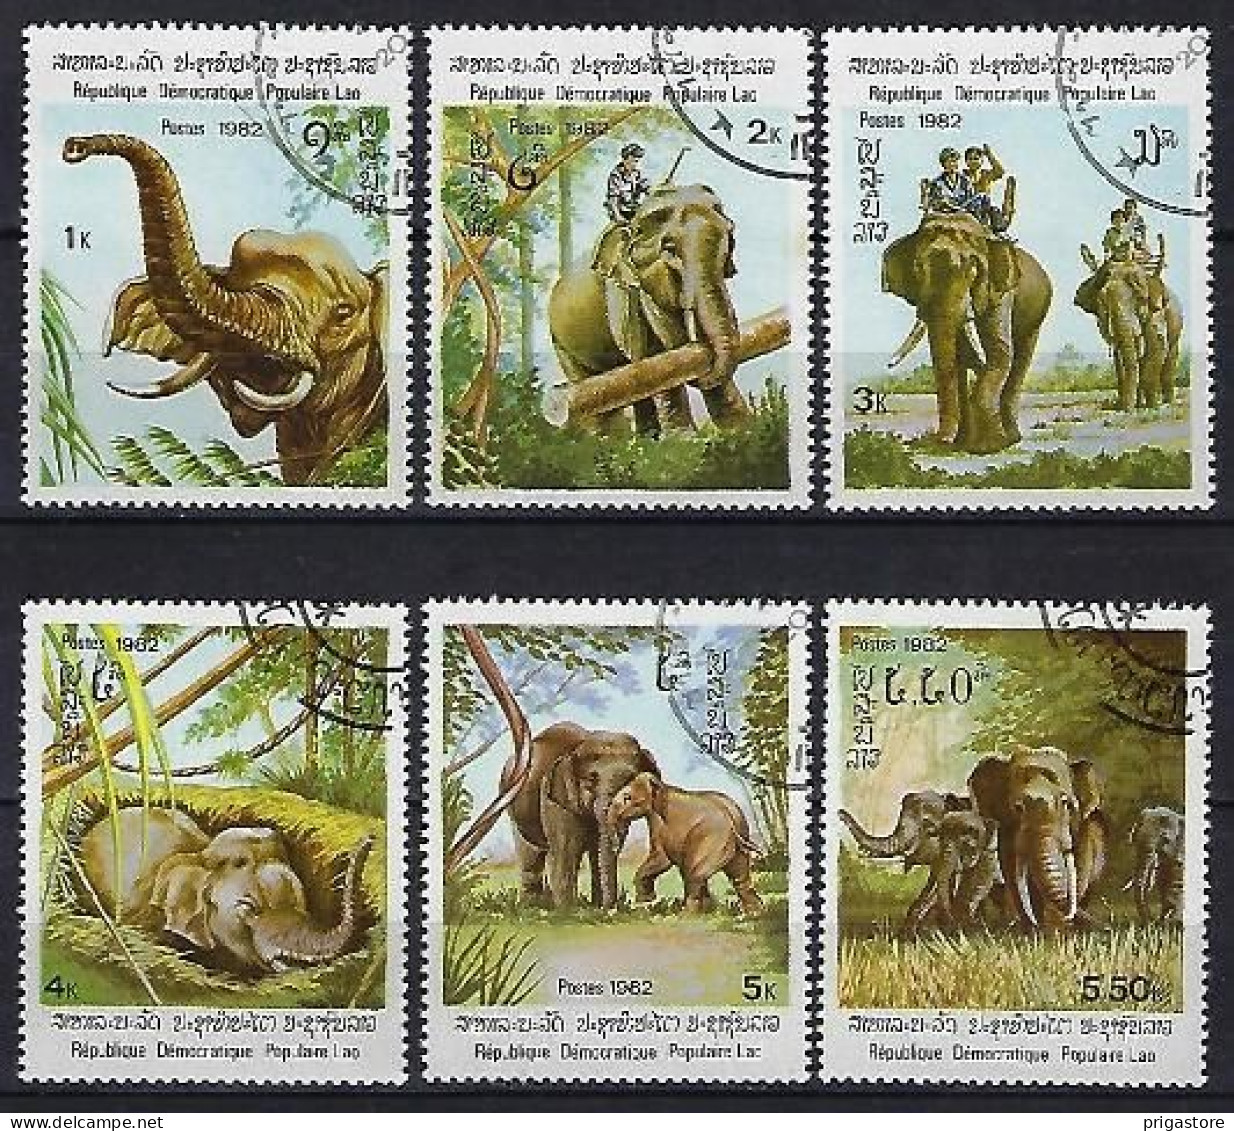 Laos 1982 Eléphants (604) Yvert 376 à 381 Oblitérés Used - Laos